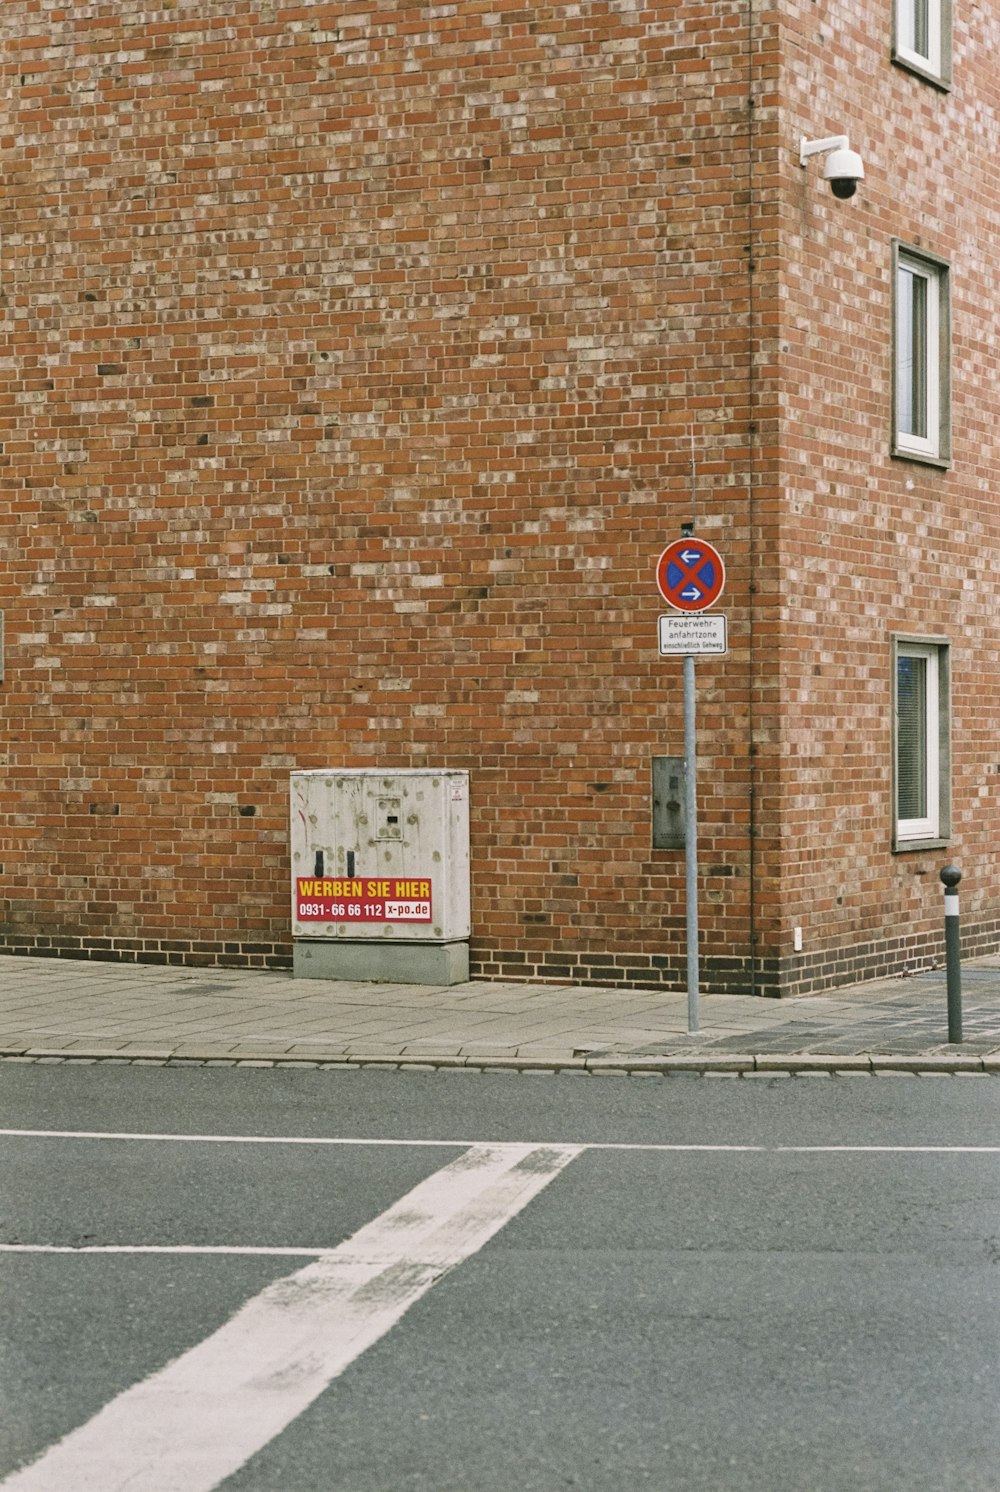 Un edificio de ladrillo con un letrero de la calle frente a él